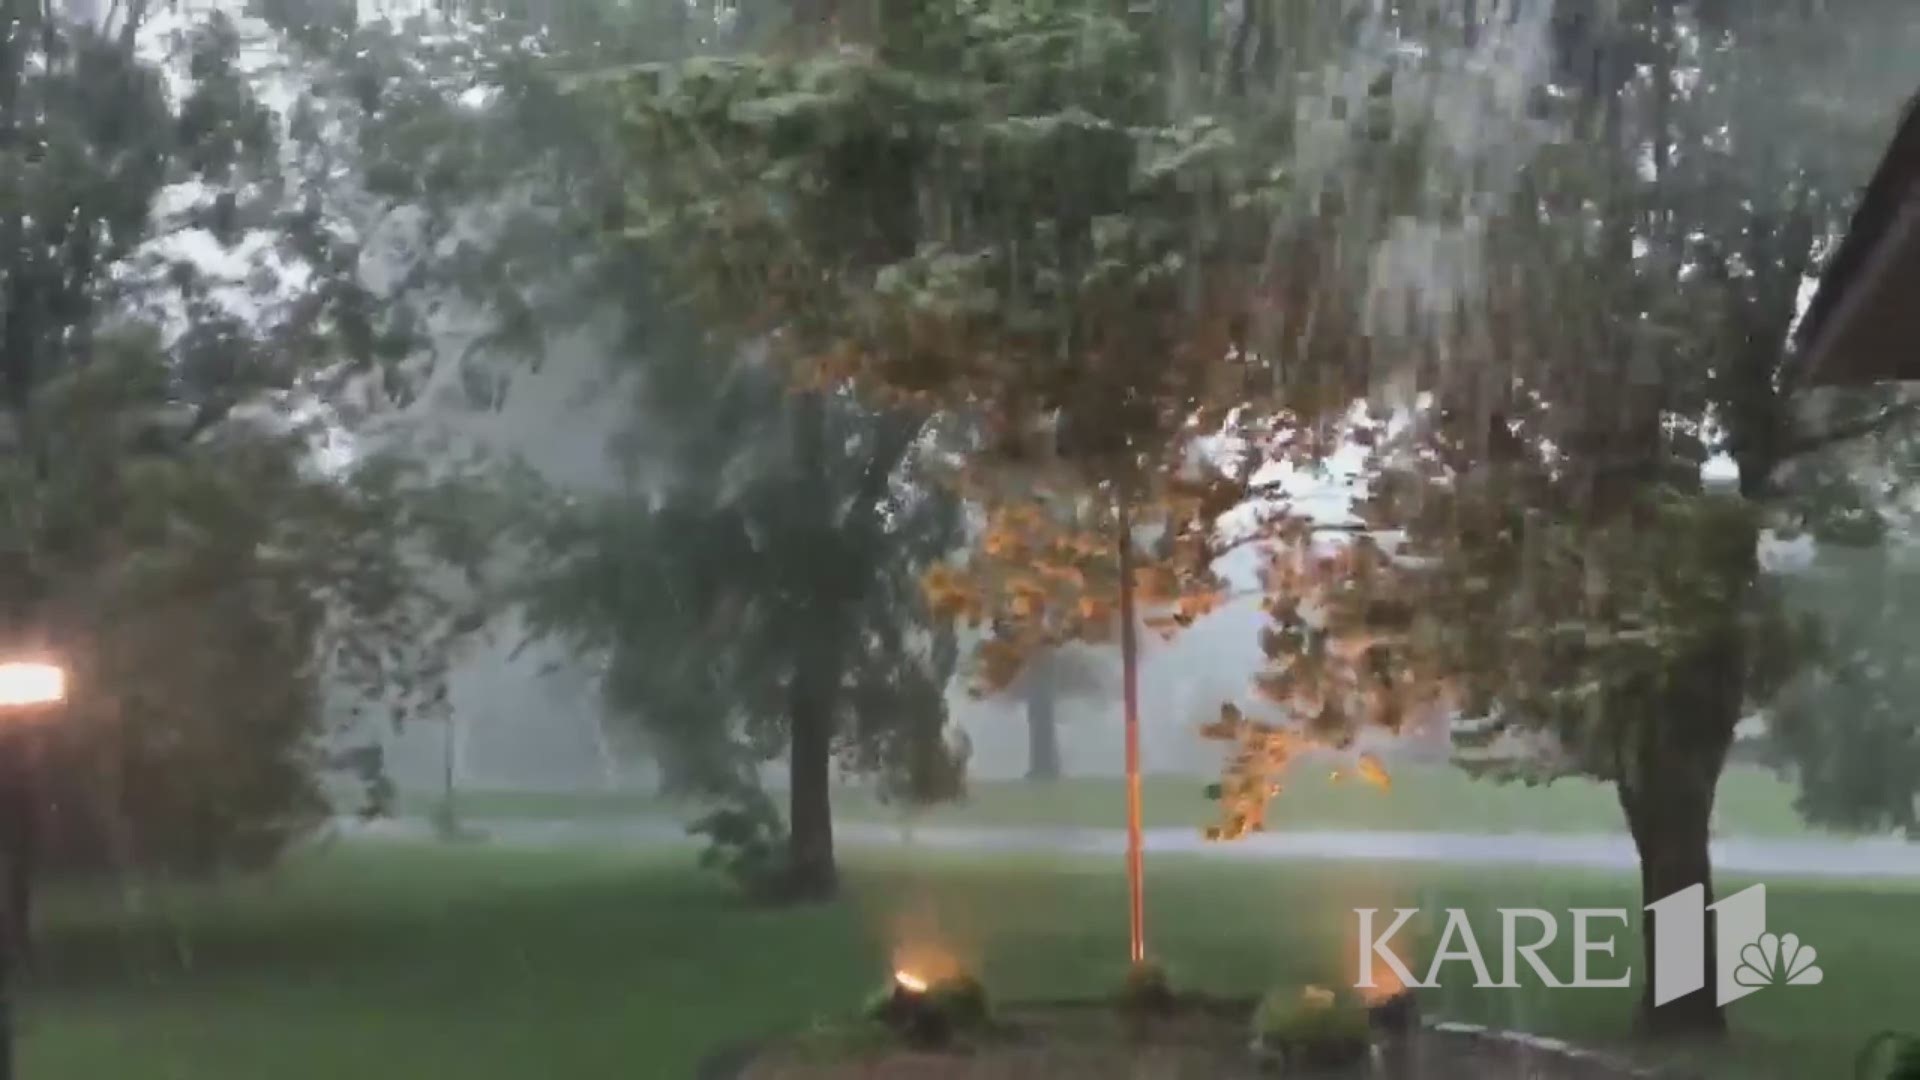 Viewer Rhonda Ganz Jensen sent us this footage of heavy rain in Andover, MN